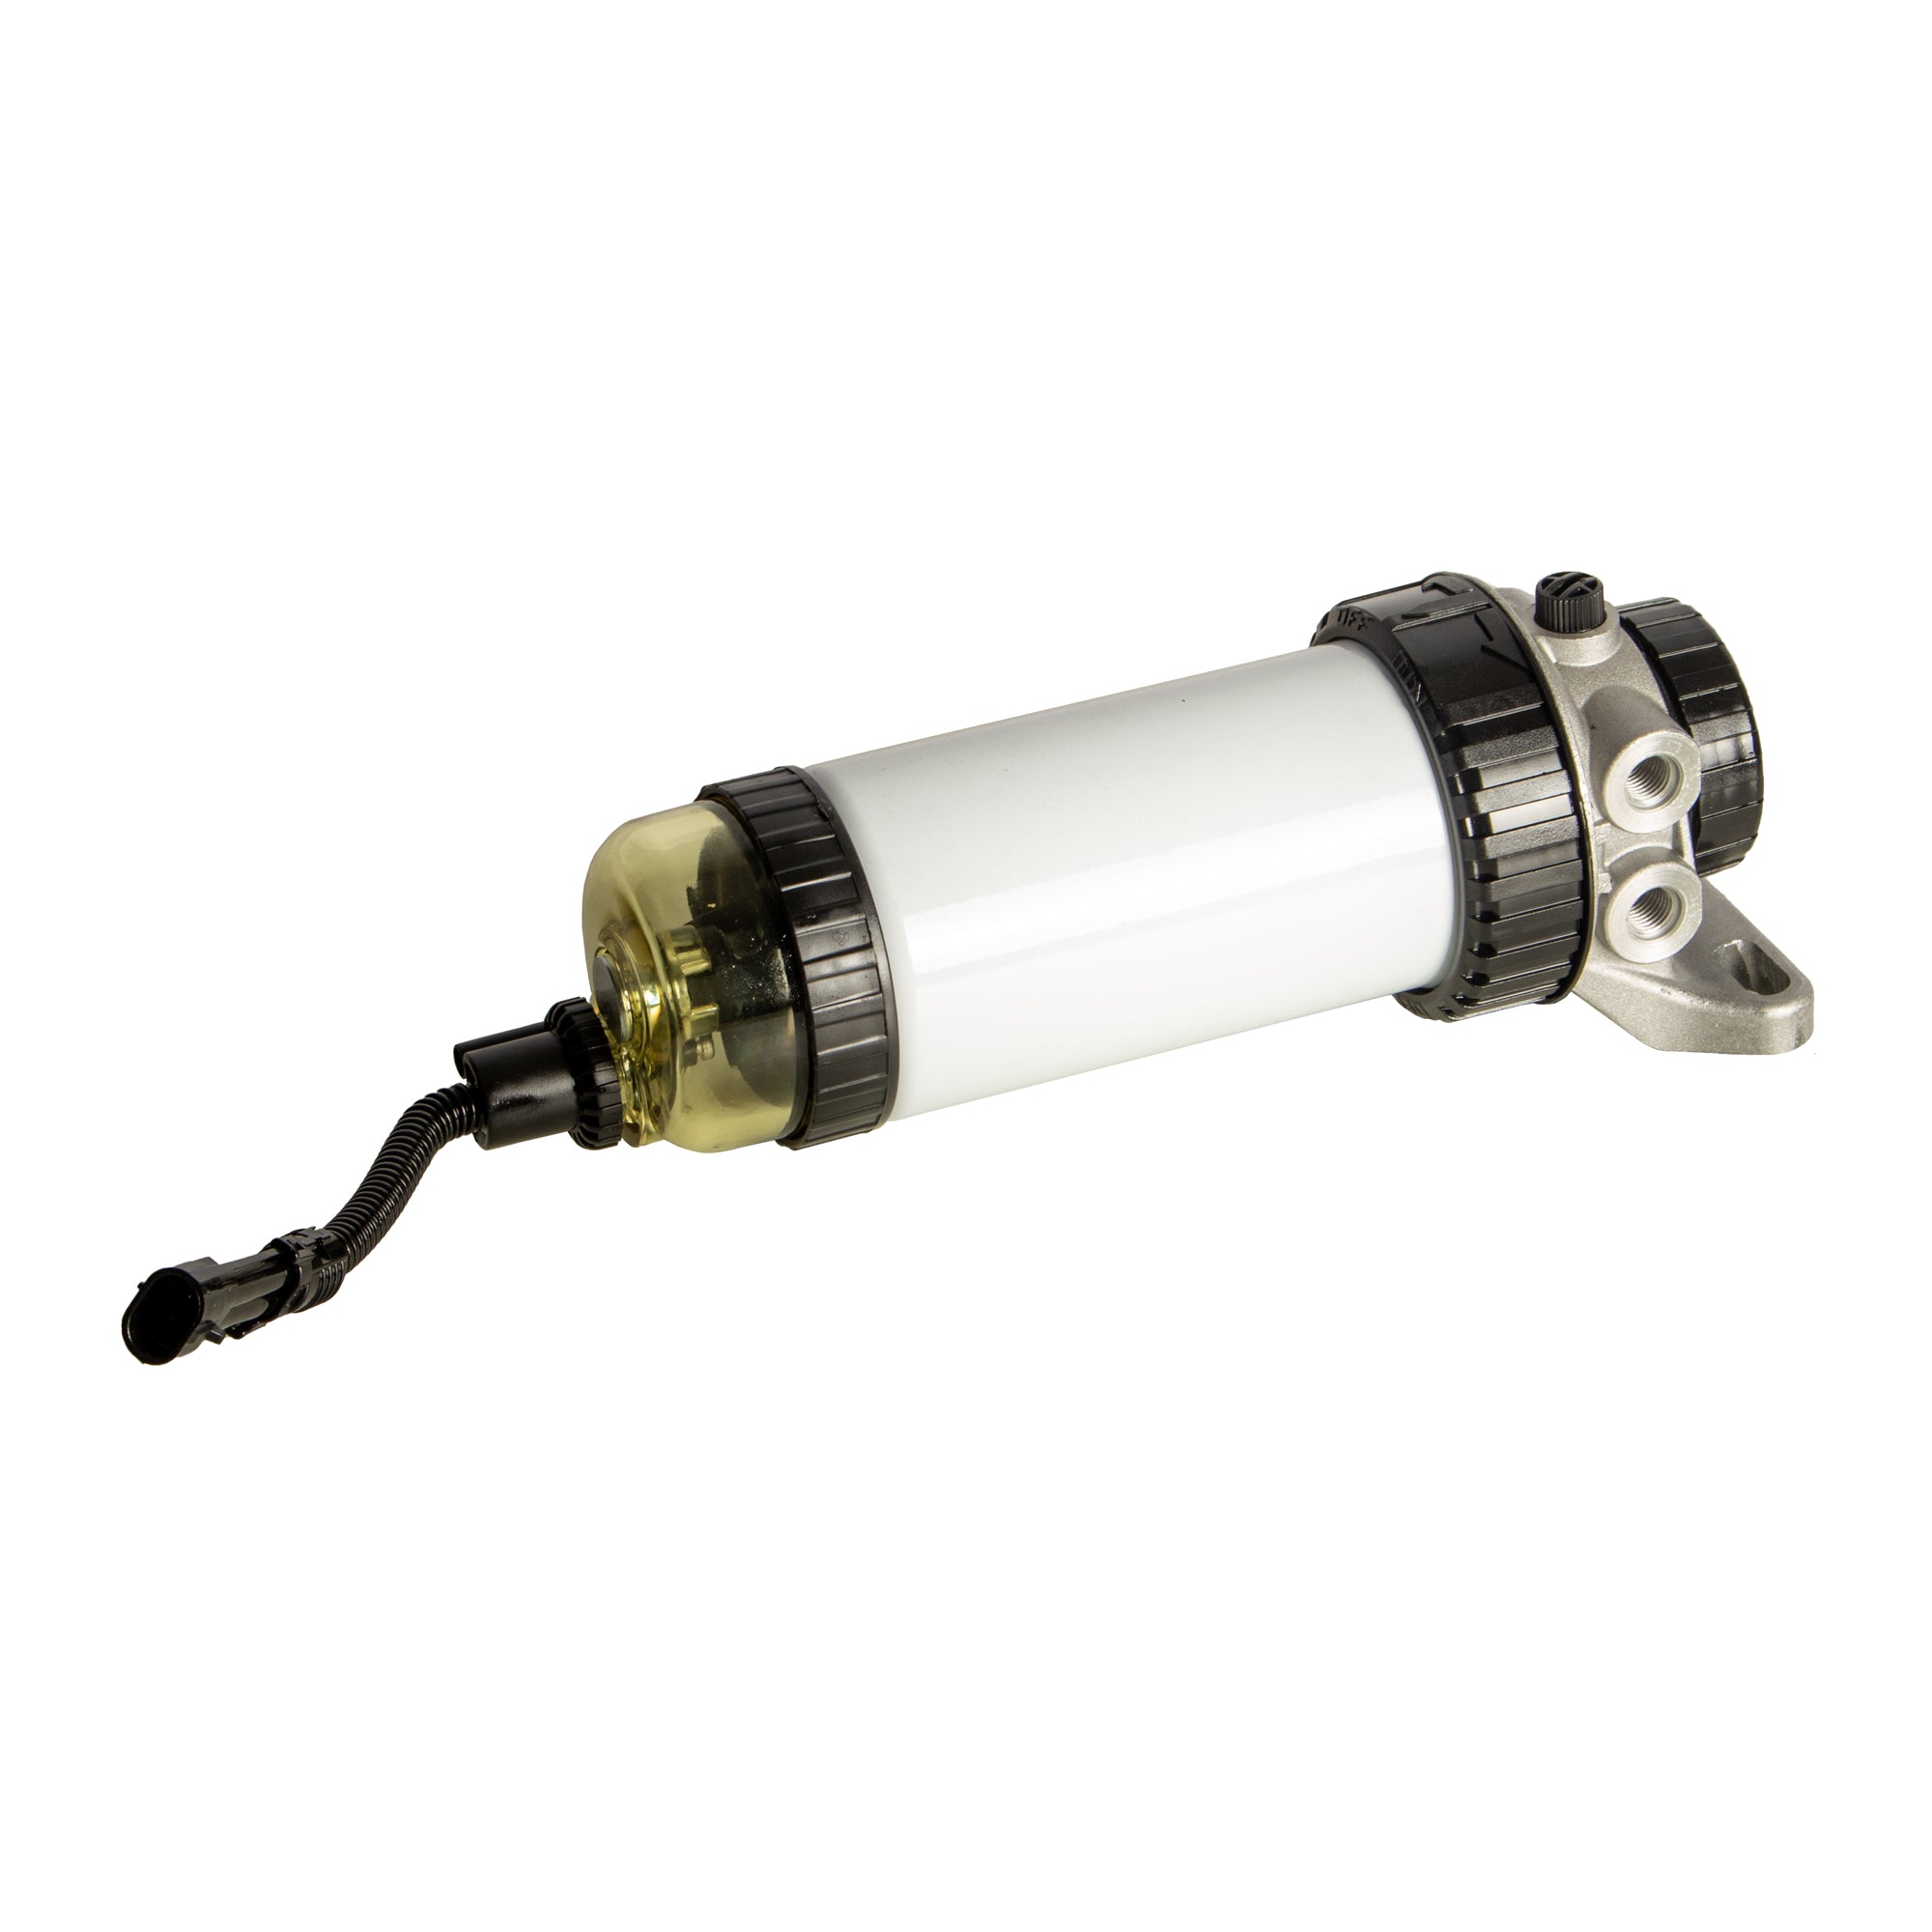 Fuel Pump Replacement for JOHN DEERE RE529641